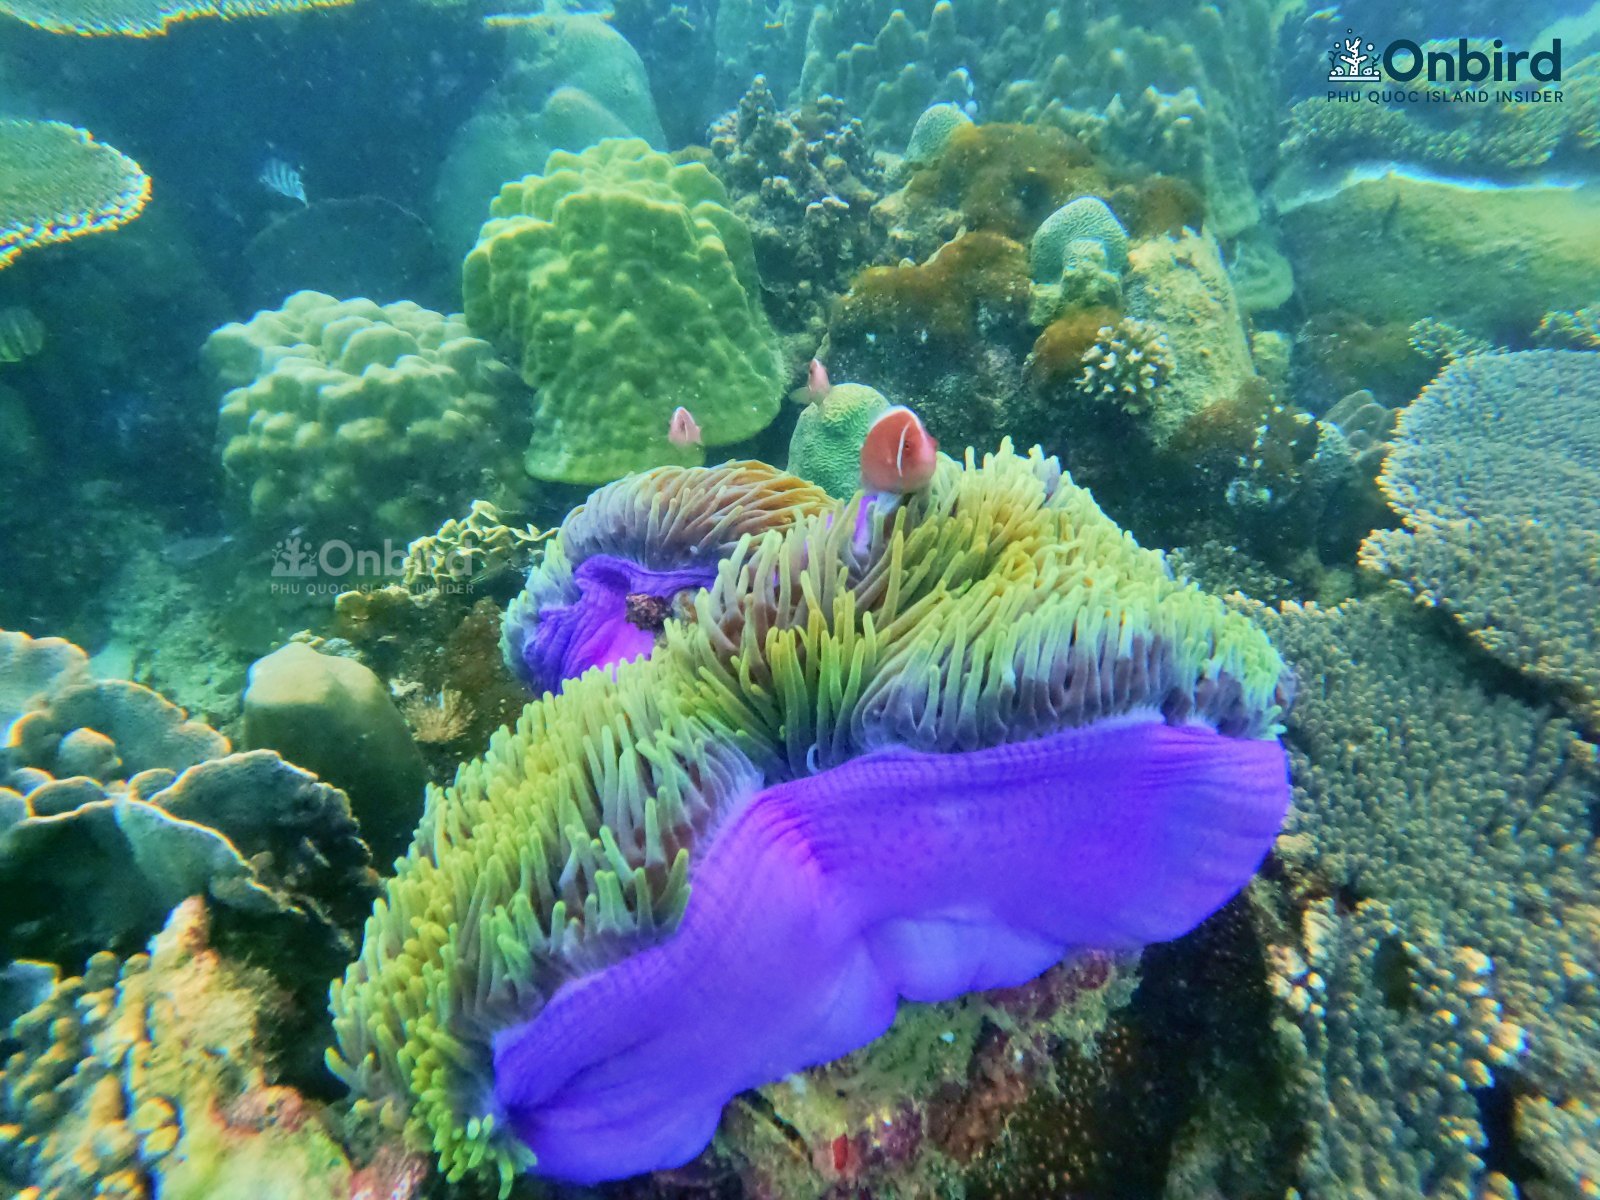 Anemone at U-Turn Coral Reef, Phu Quoc Island, Vietnam